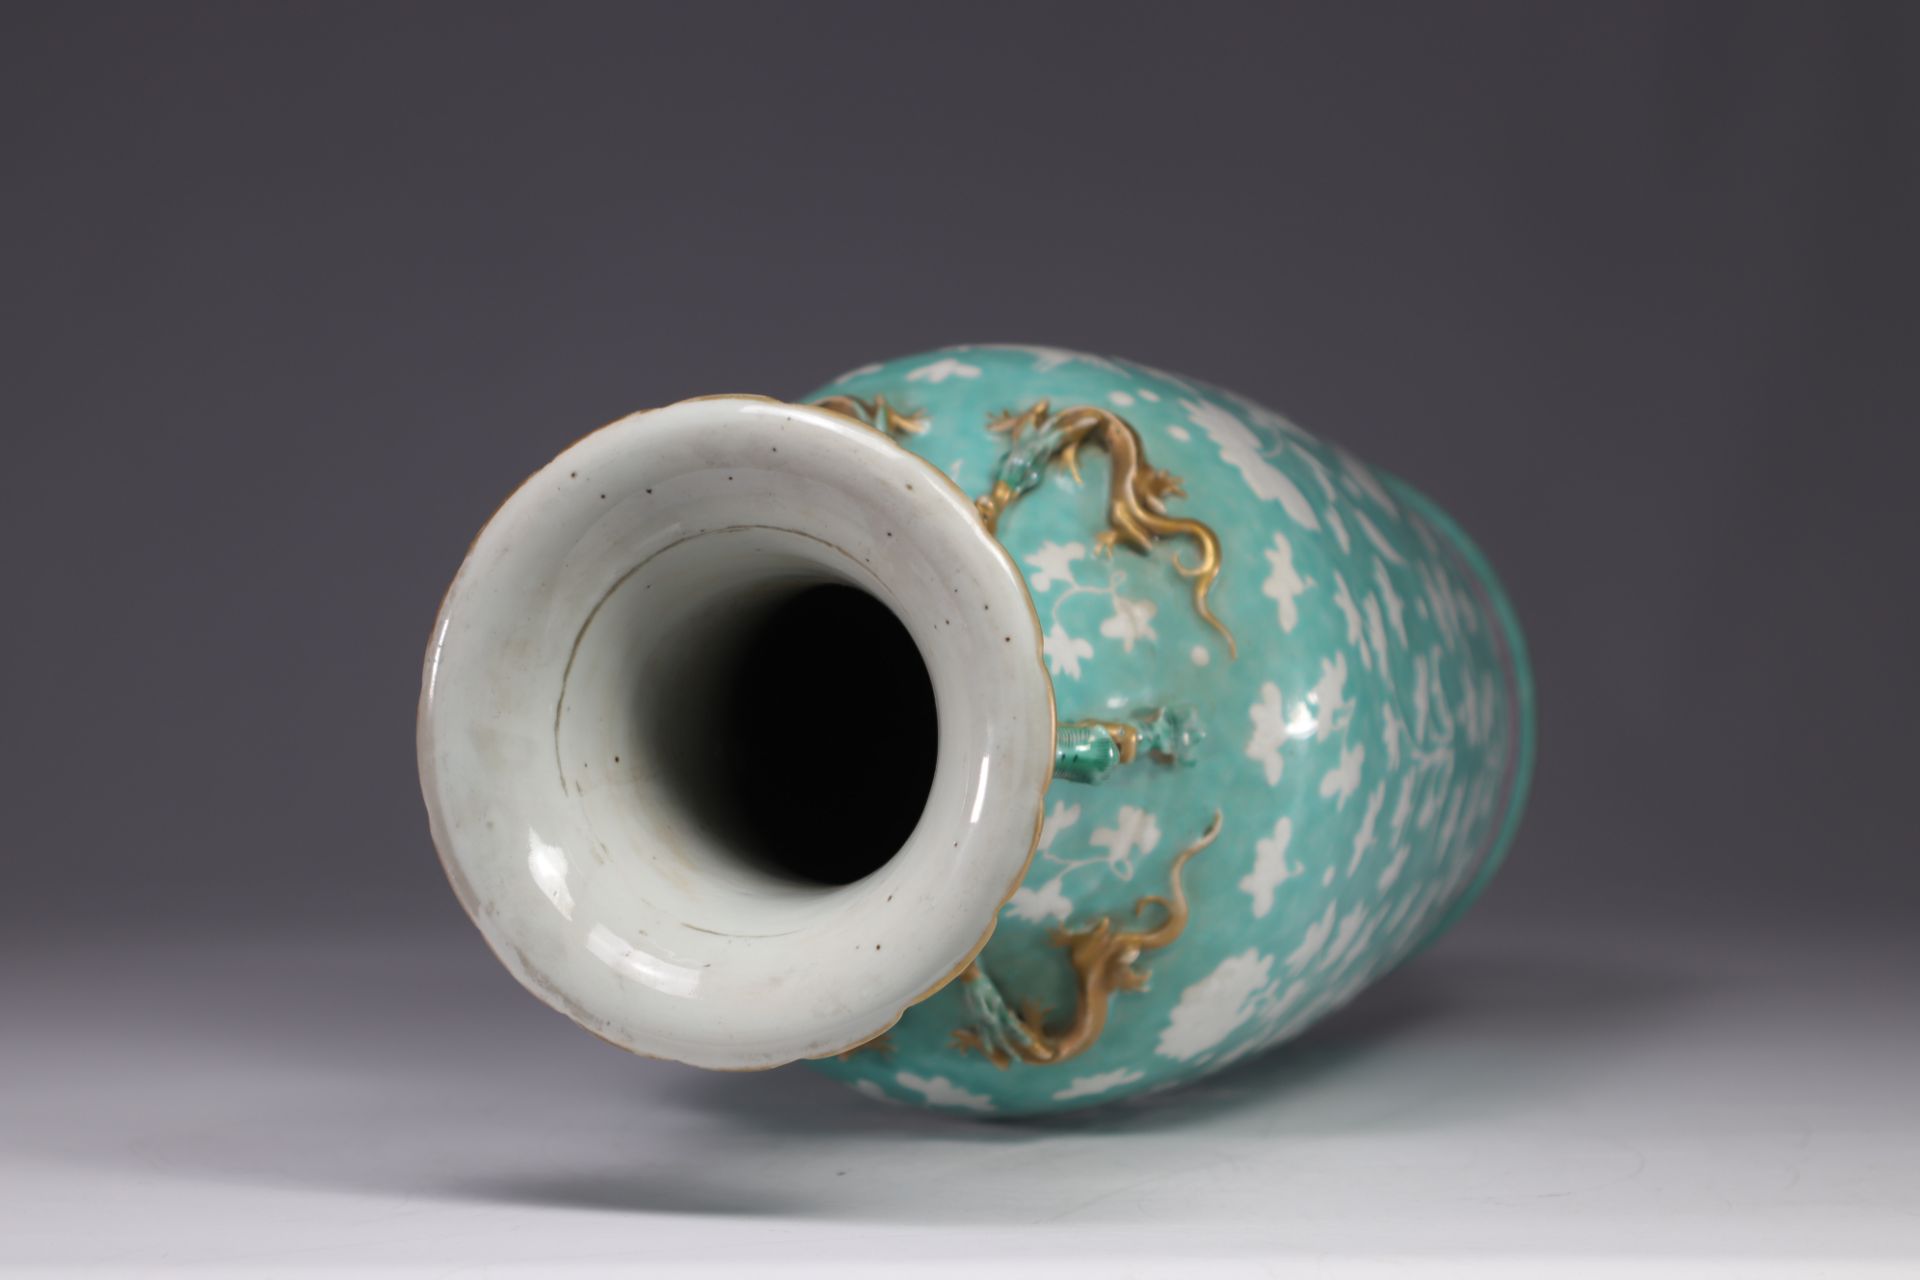 China - large porcelain vase decorated with flowers and birds, turquoise glaze, 19th century. - Image 5 of 6